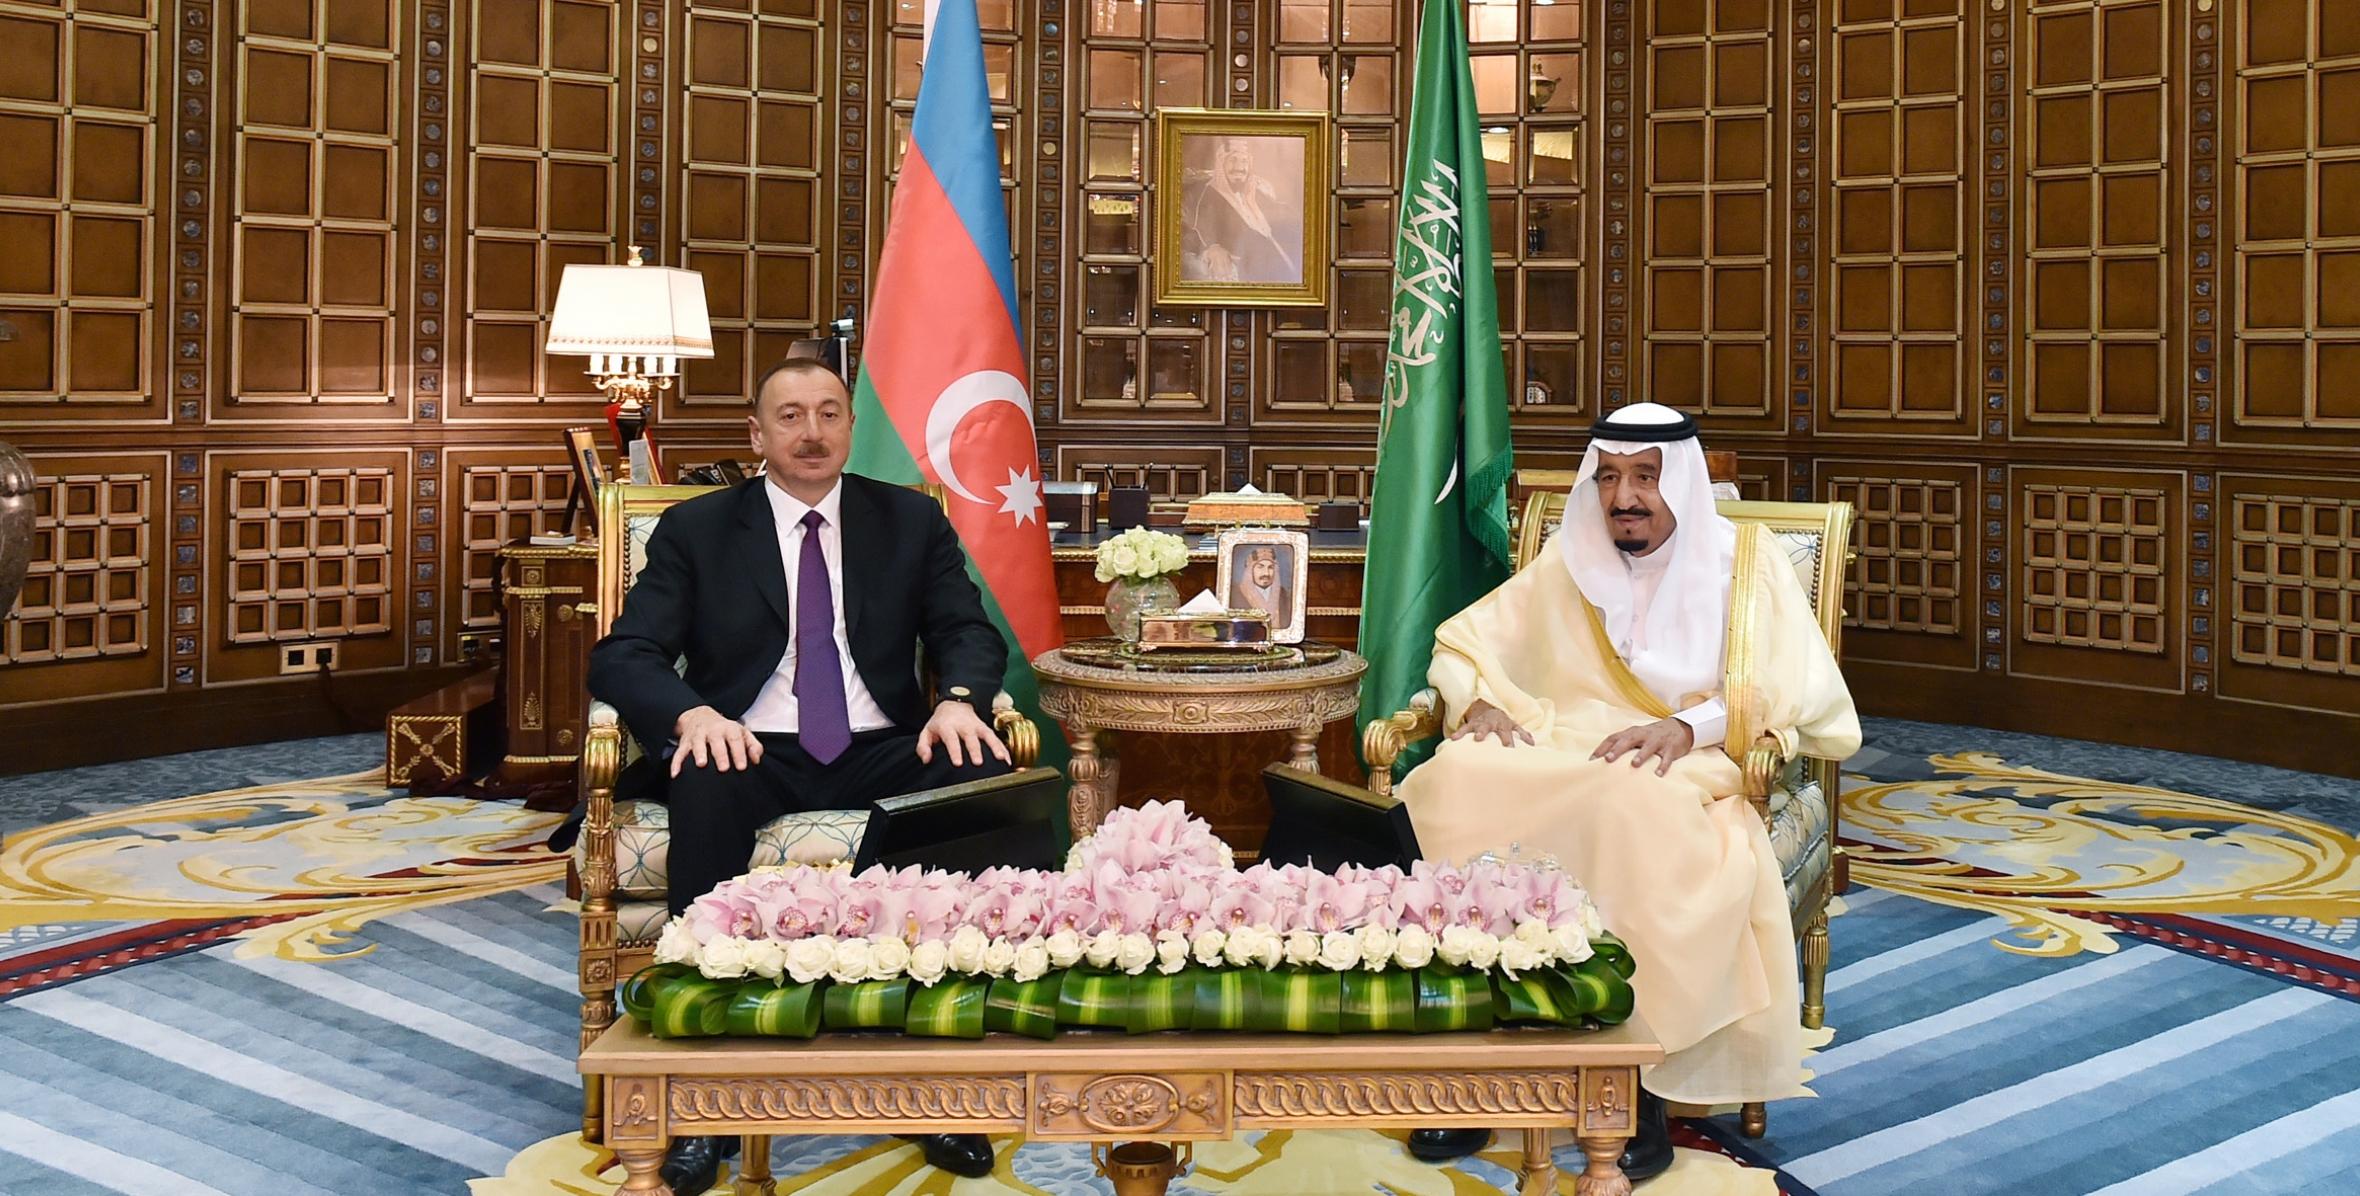 Ilham Aliyev met with King of Saudi Arabia Salman Bin Abdulaziz Al Saud